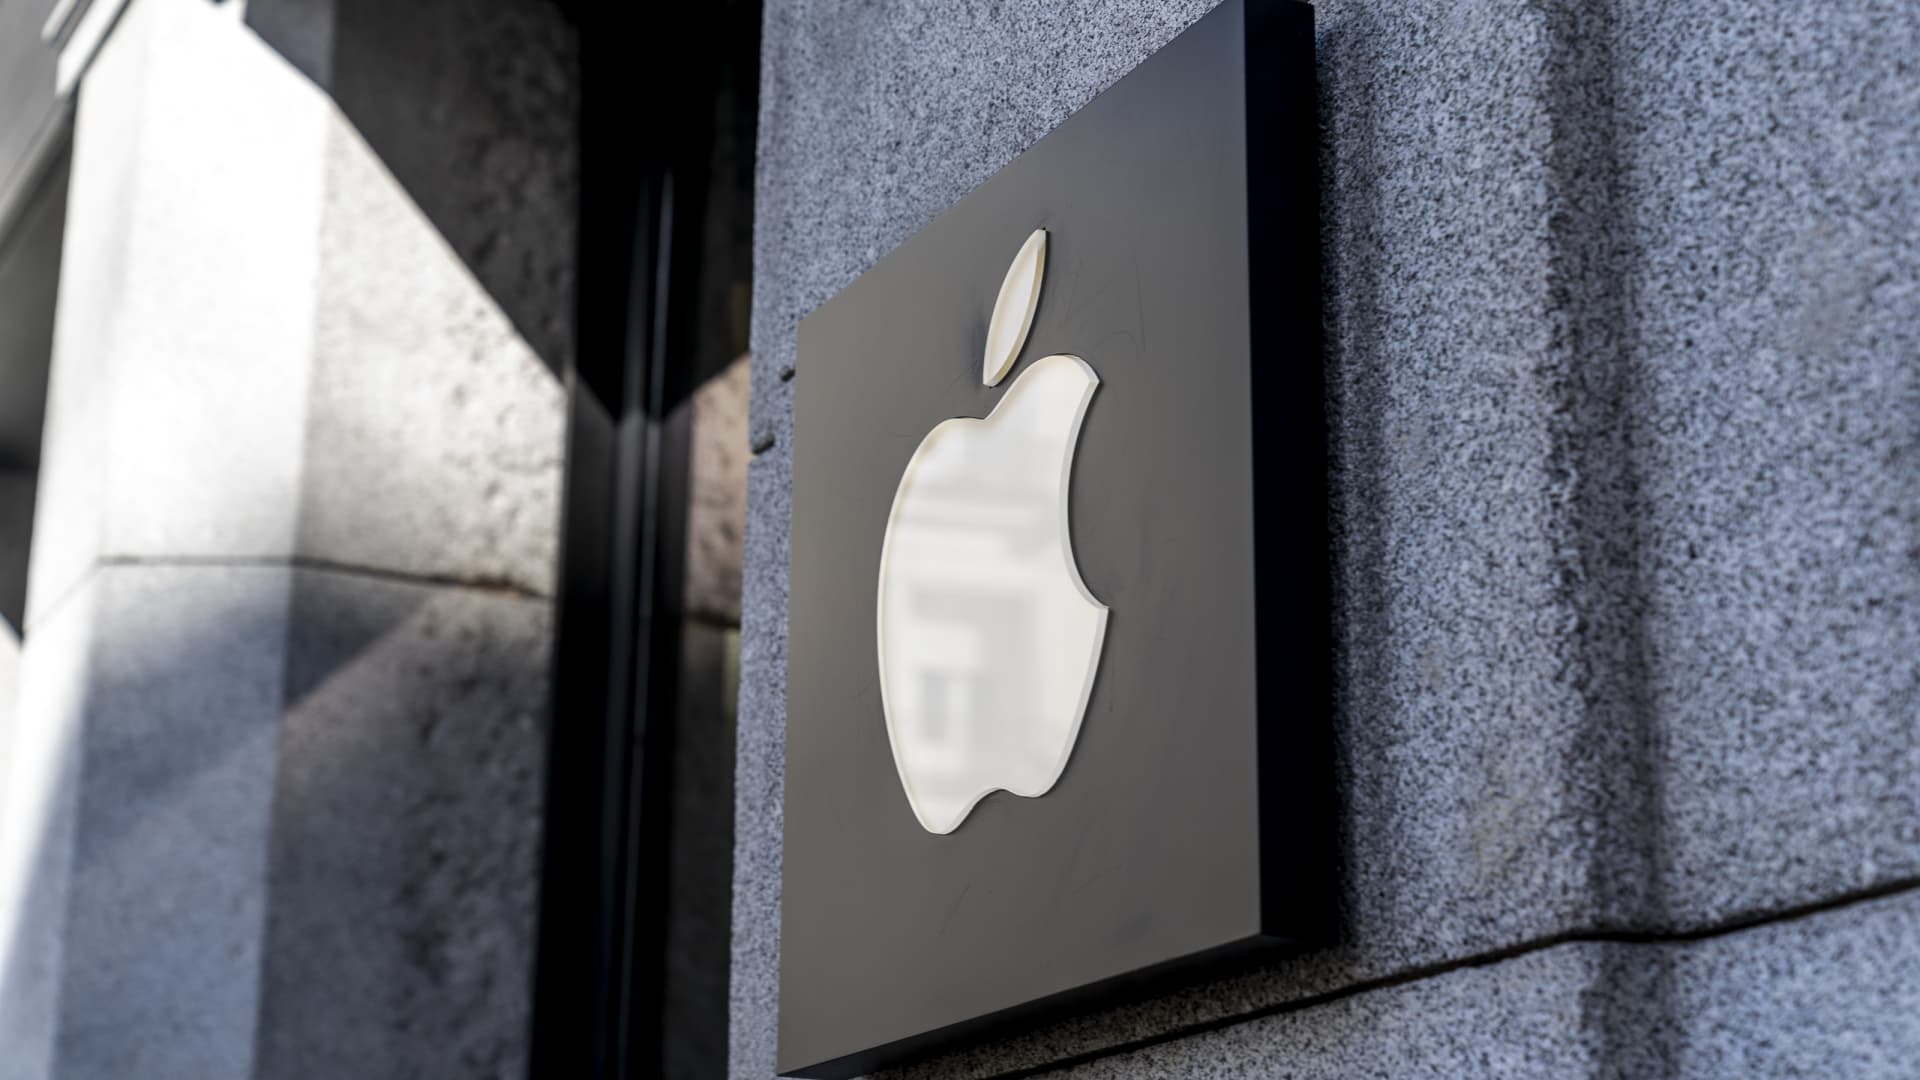 EU set to fine Apple 500 million euros in antitrust crackdown: Report